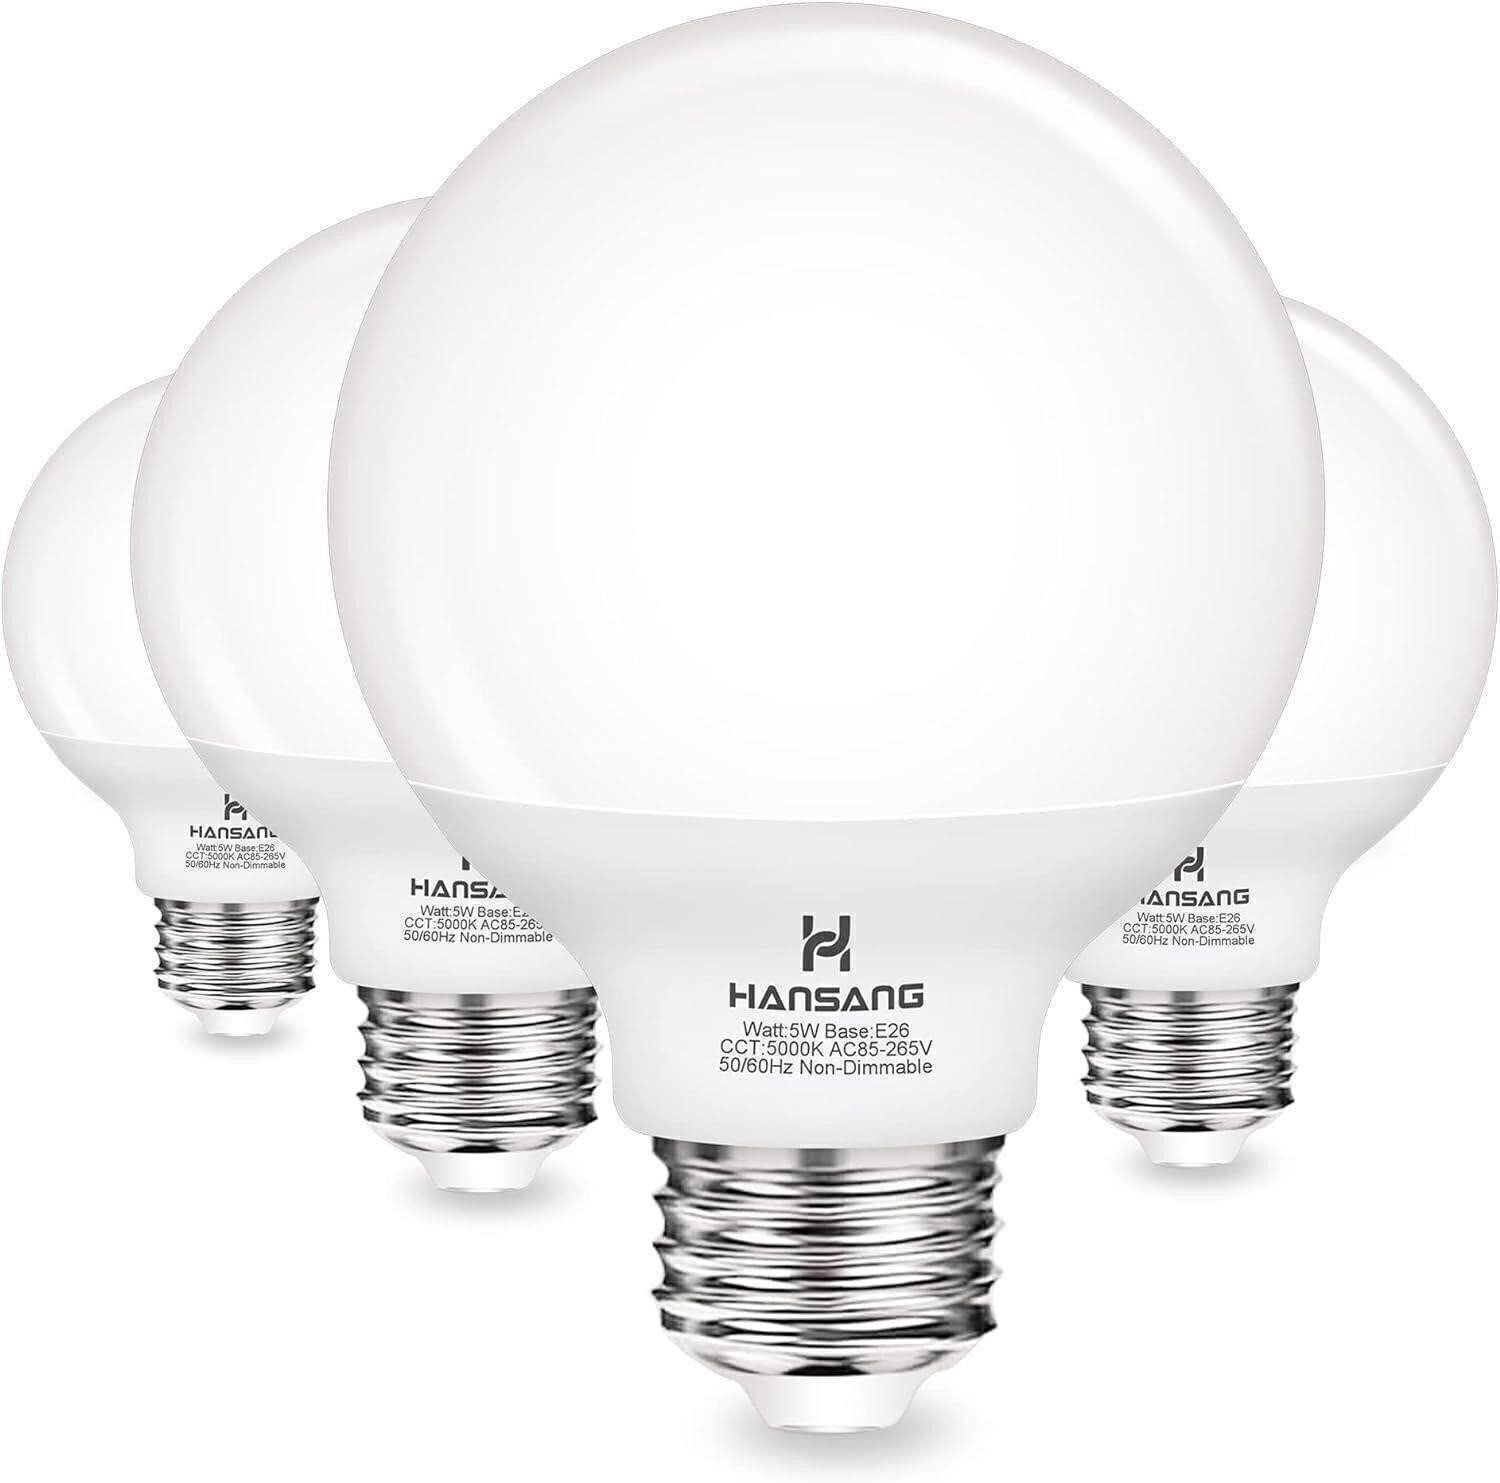 Hansang G25 LED Globe Light Bulbs - 60W - 2 Boxes